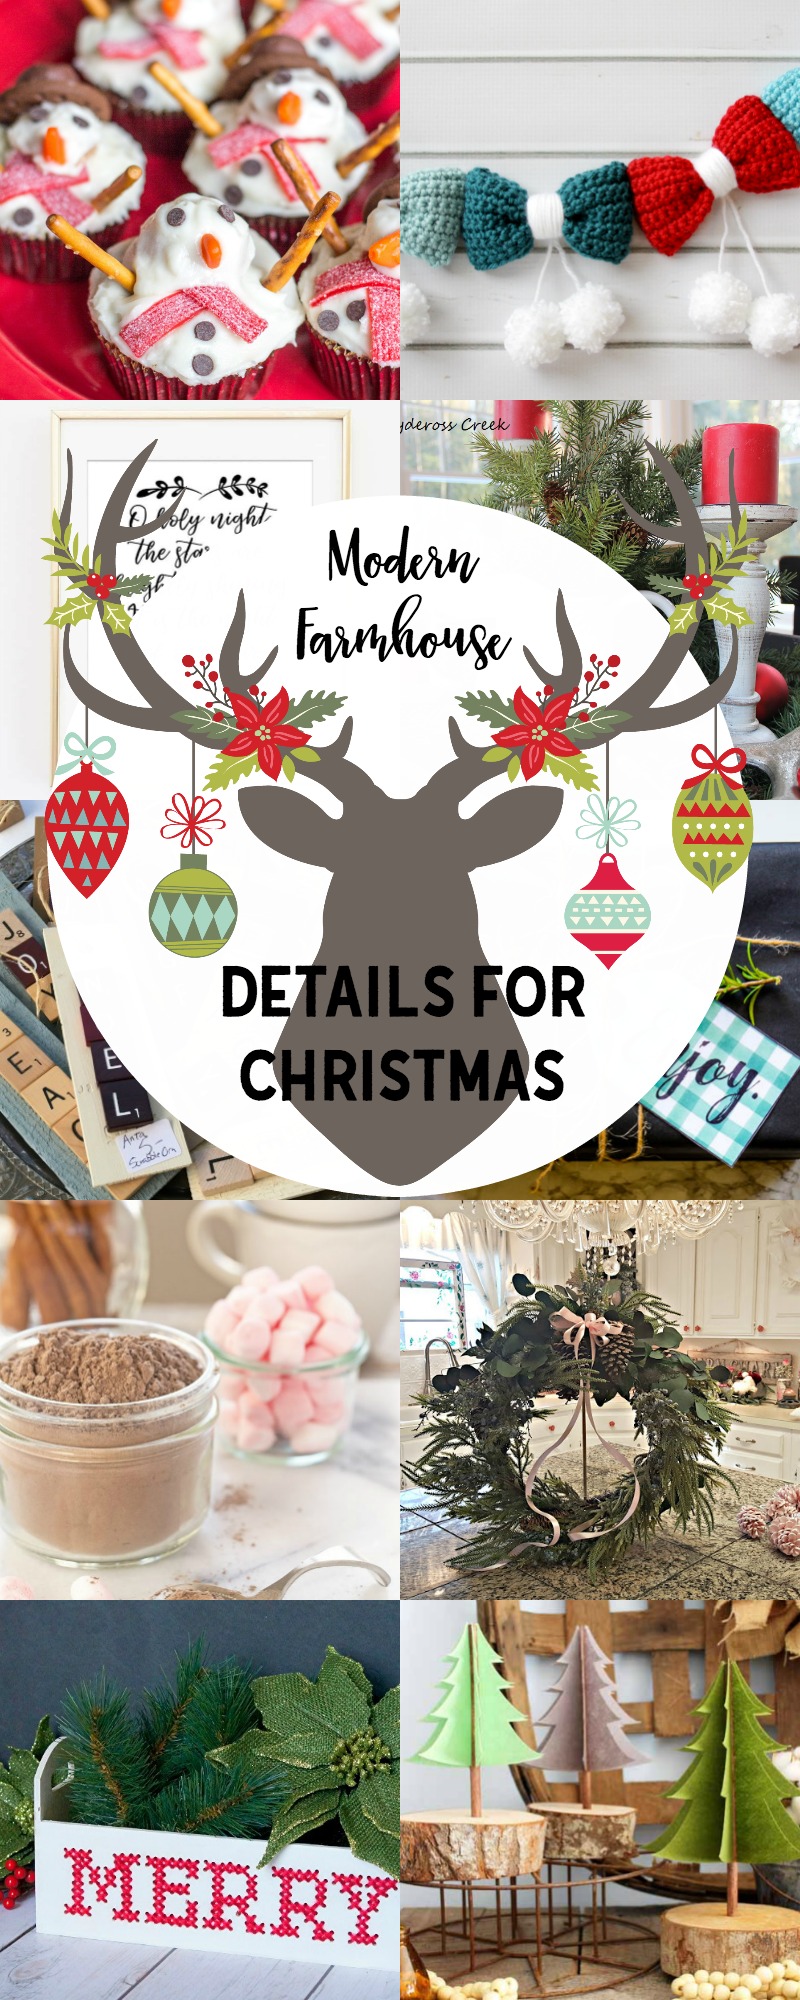 Farmhouse Details for Christmas